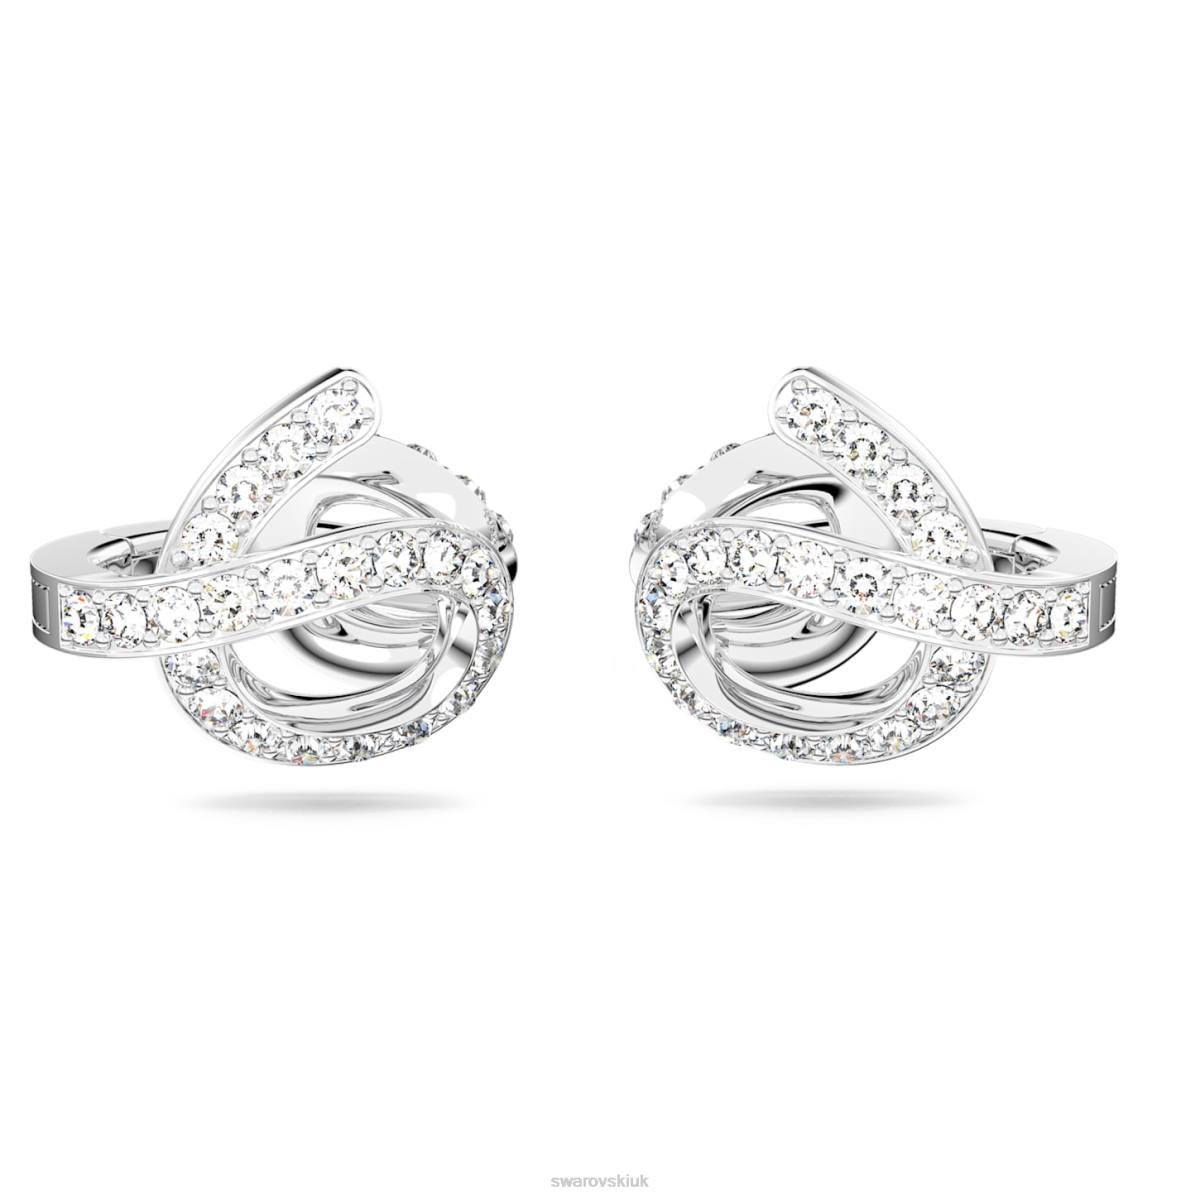 Jewelry Swarovski Fluenta clip earrings Reignited crystals, White, Rhodium plated 48JX958